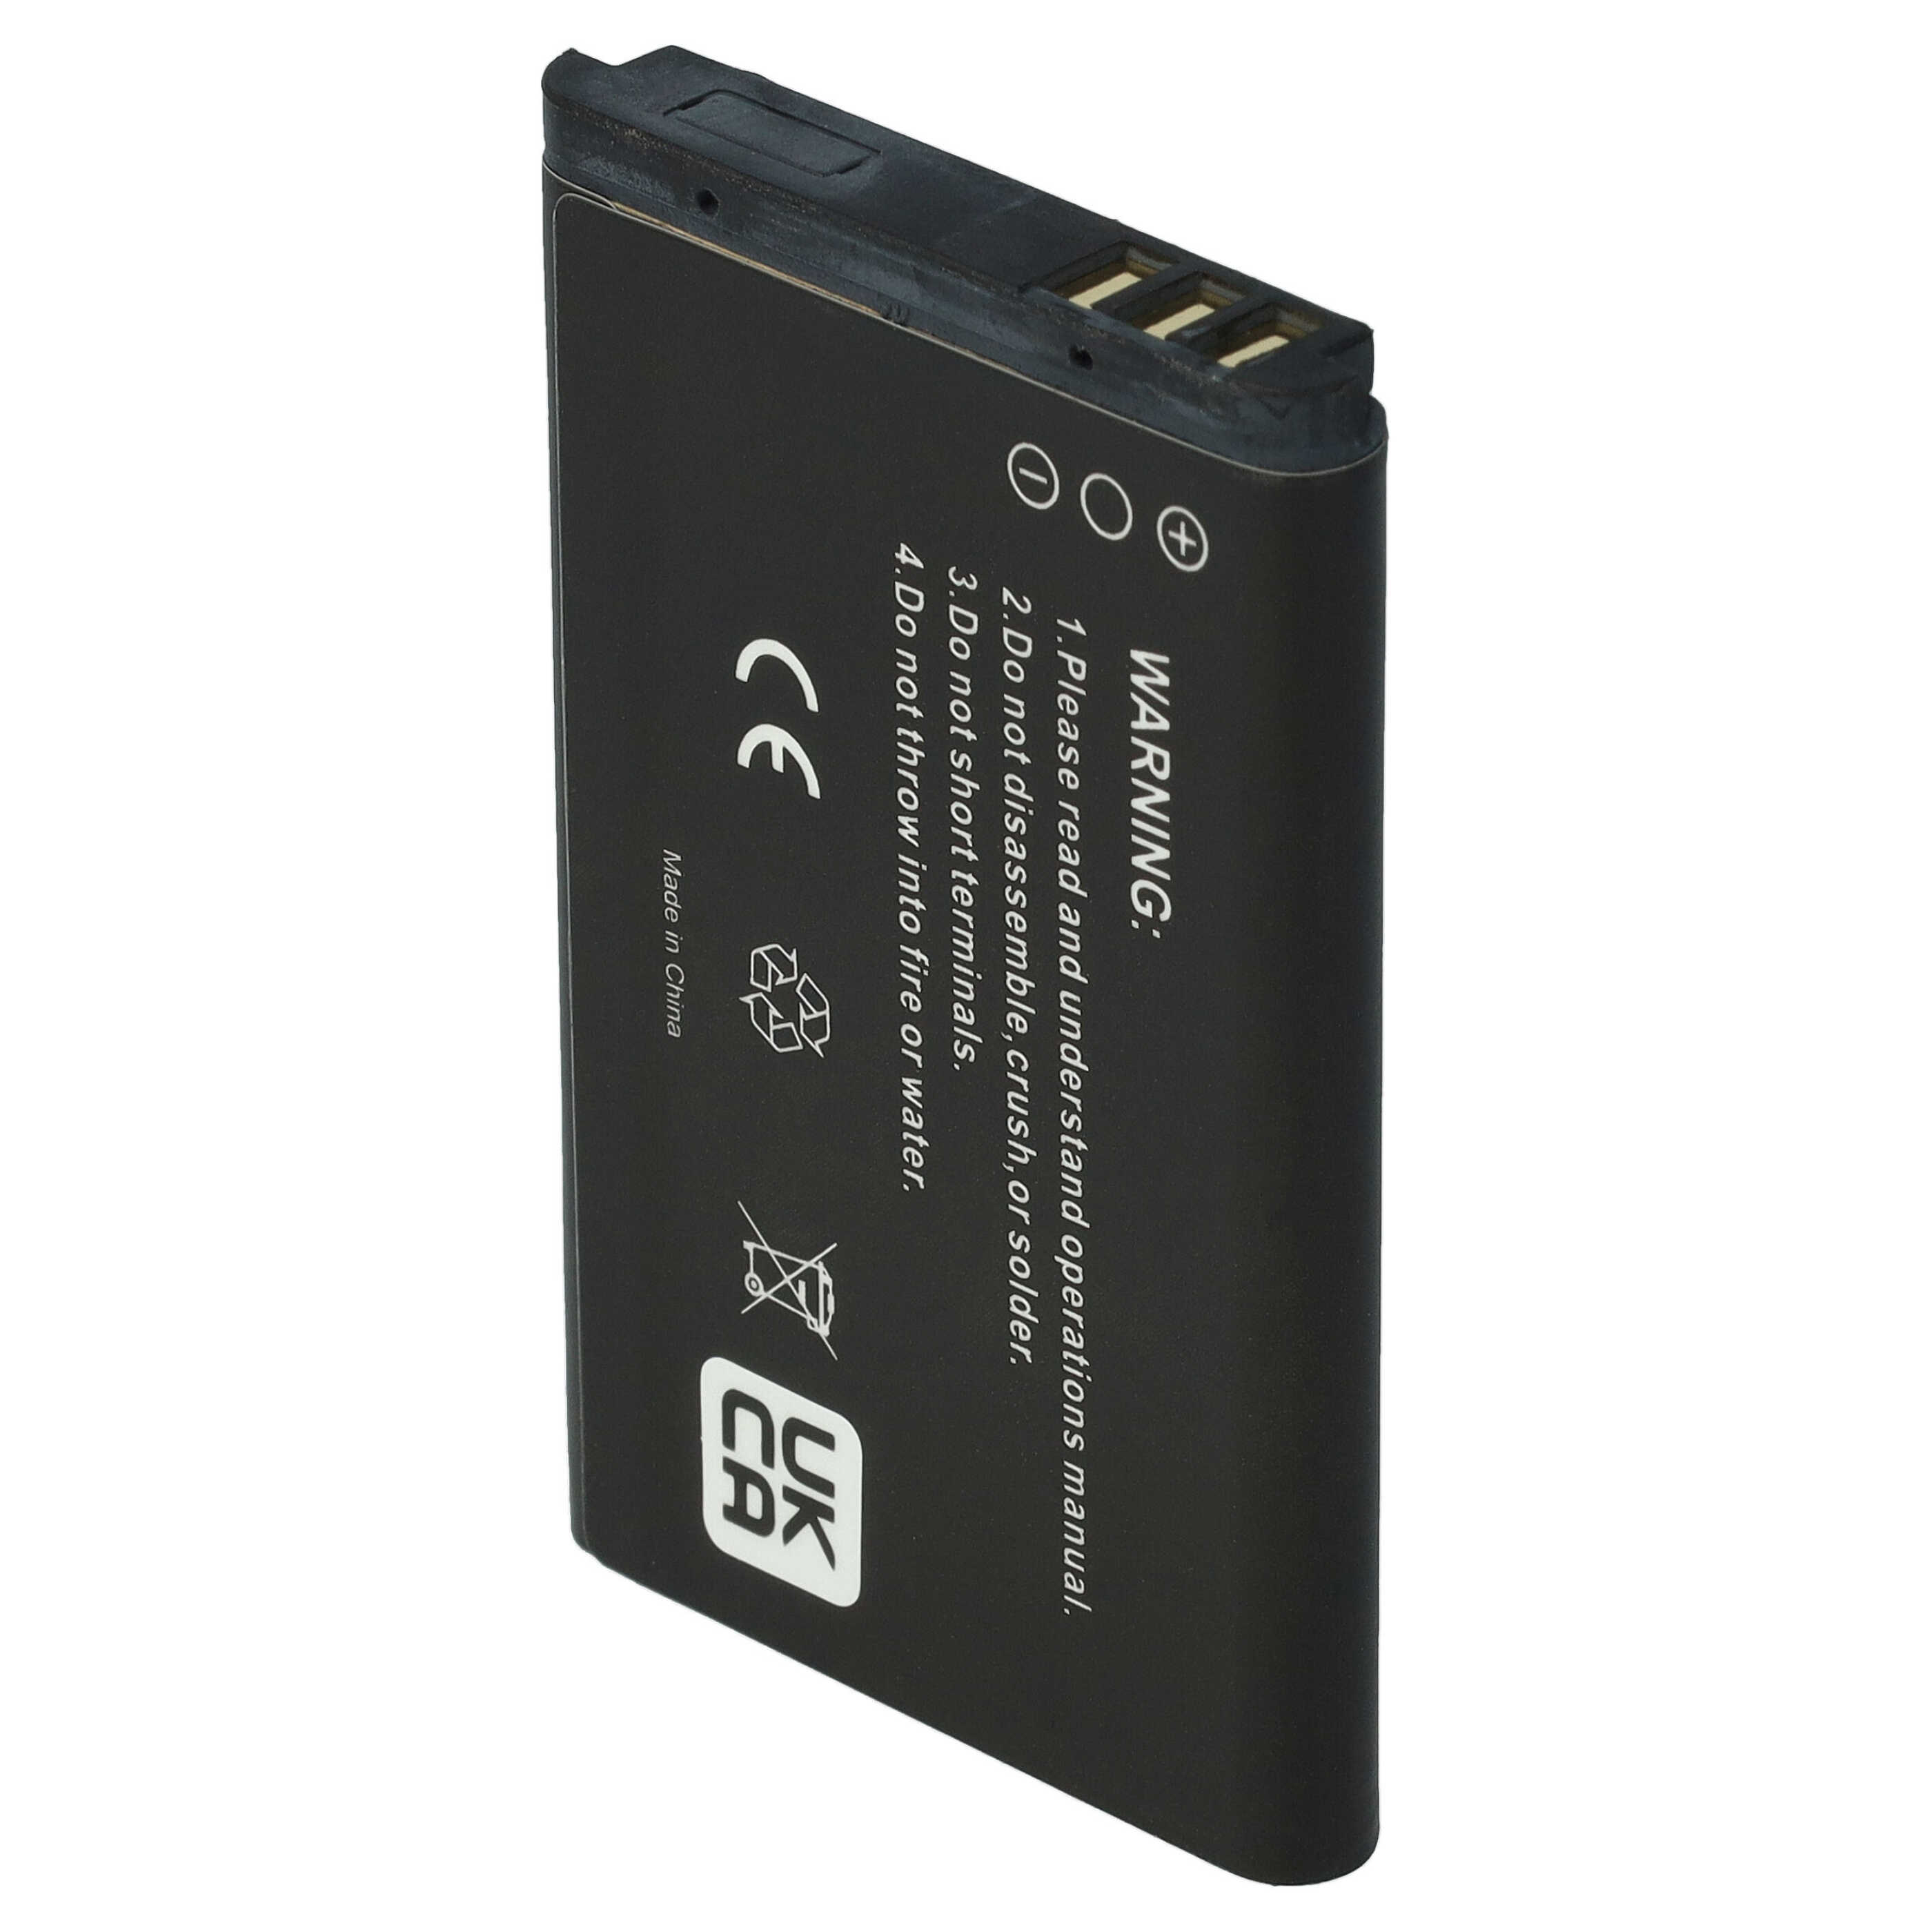 Batería reemplaza Garmin 010-10840-00 para GPS Garmin - 700 mAh 3,7 V Li-Ion